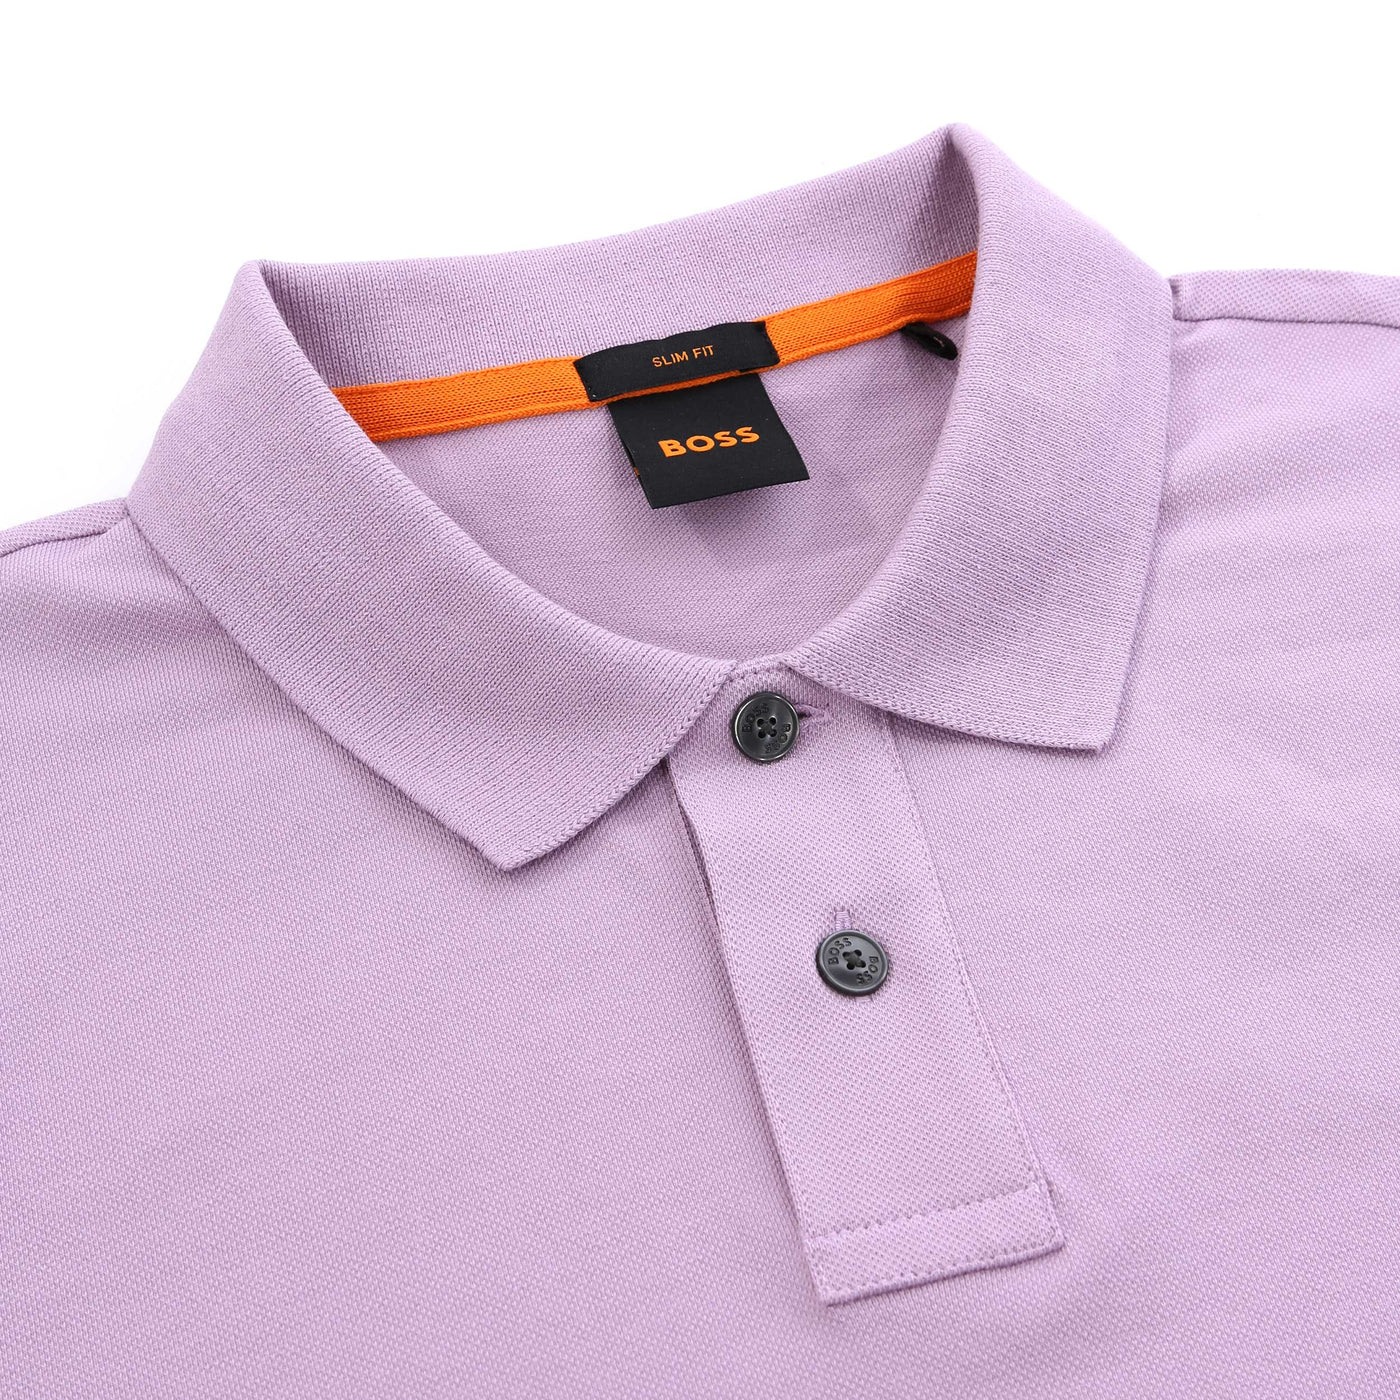 BOSS Passenger Polo Shirt in Pastel Purple Collar